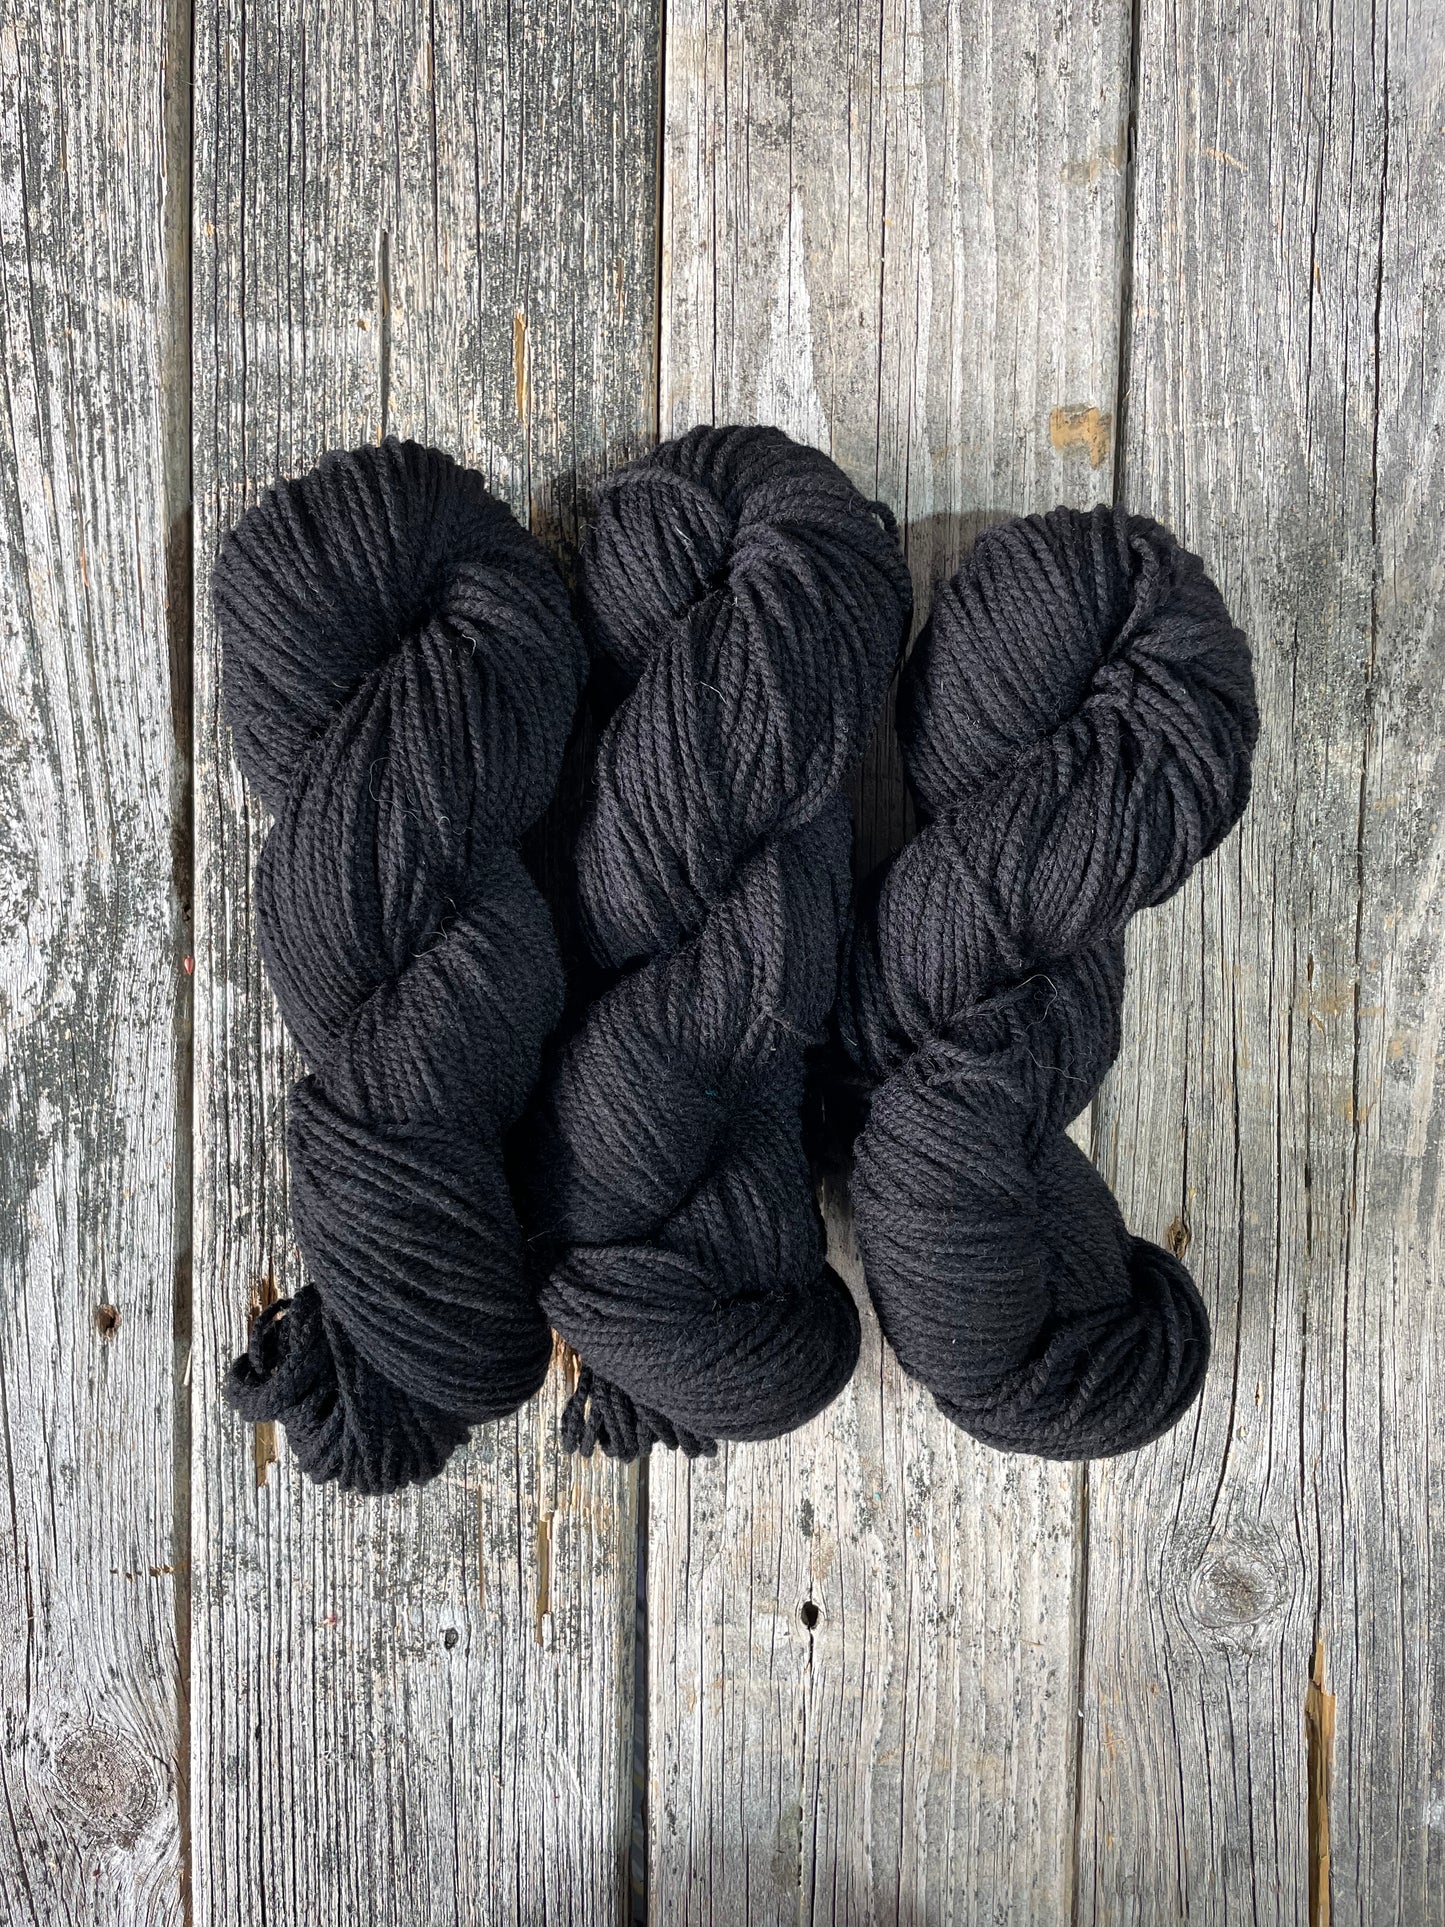 Briggs & Little Tuffy: Black - Maine Yarn & Fiber Supply